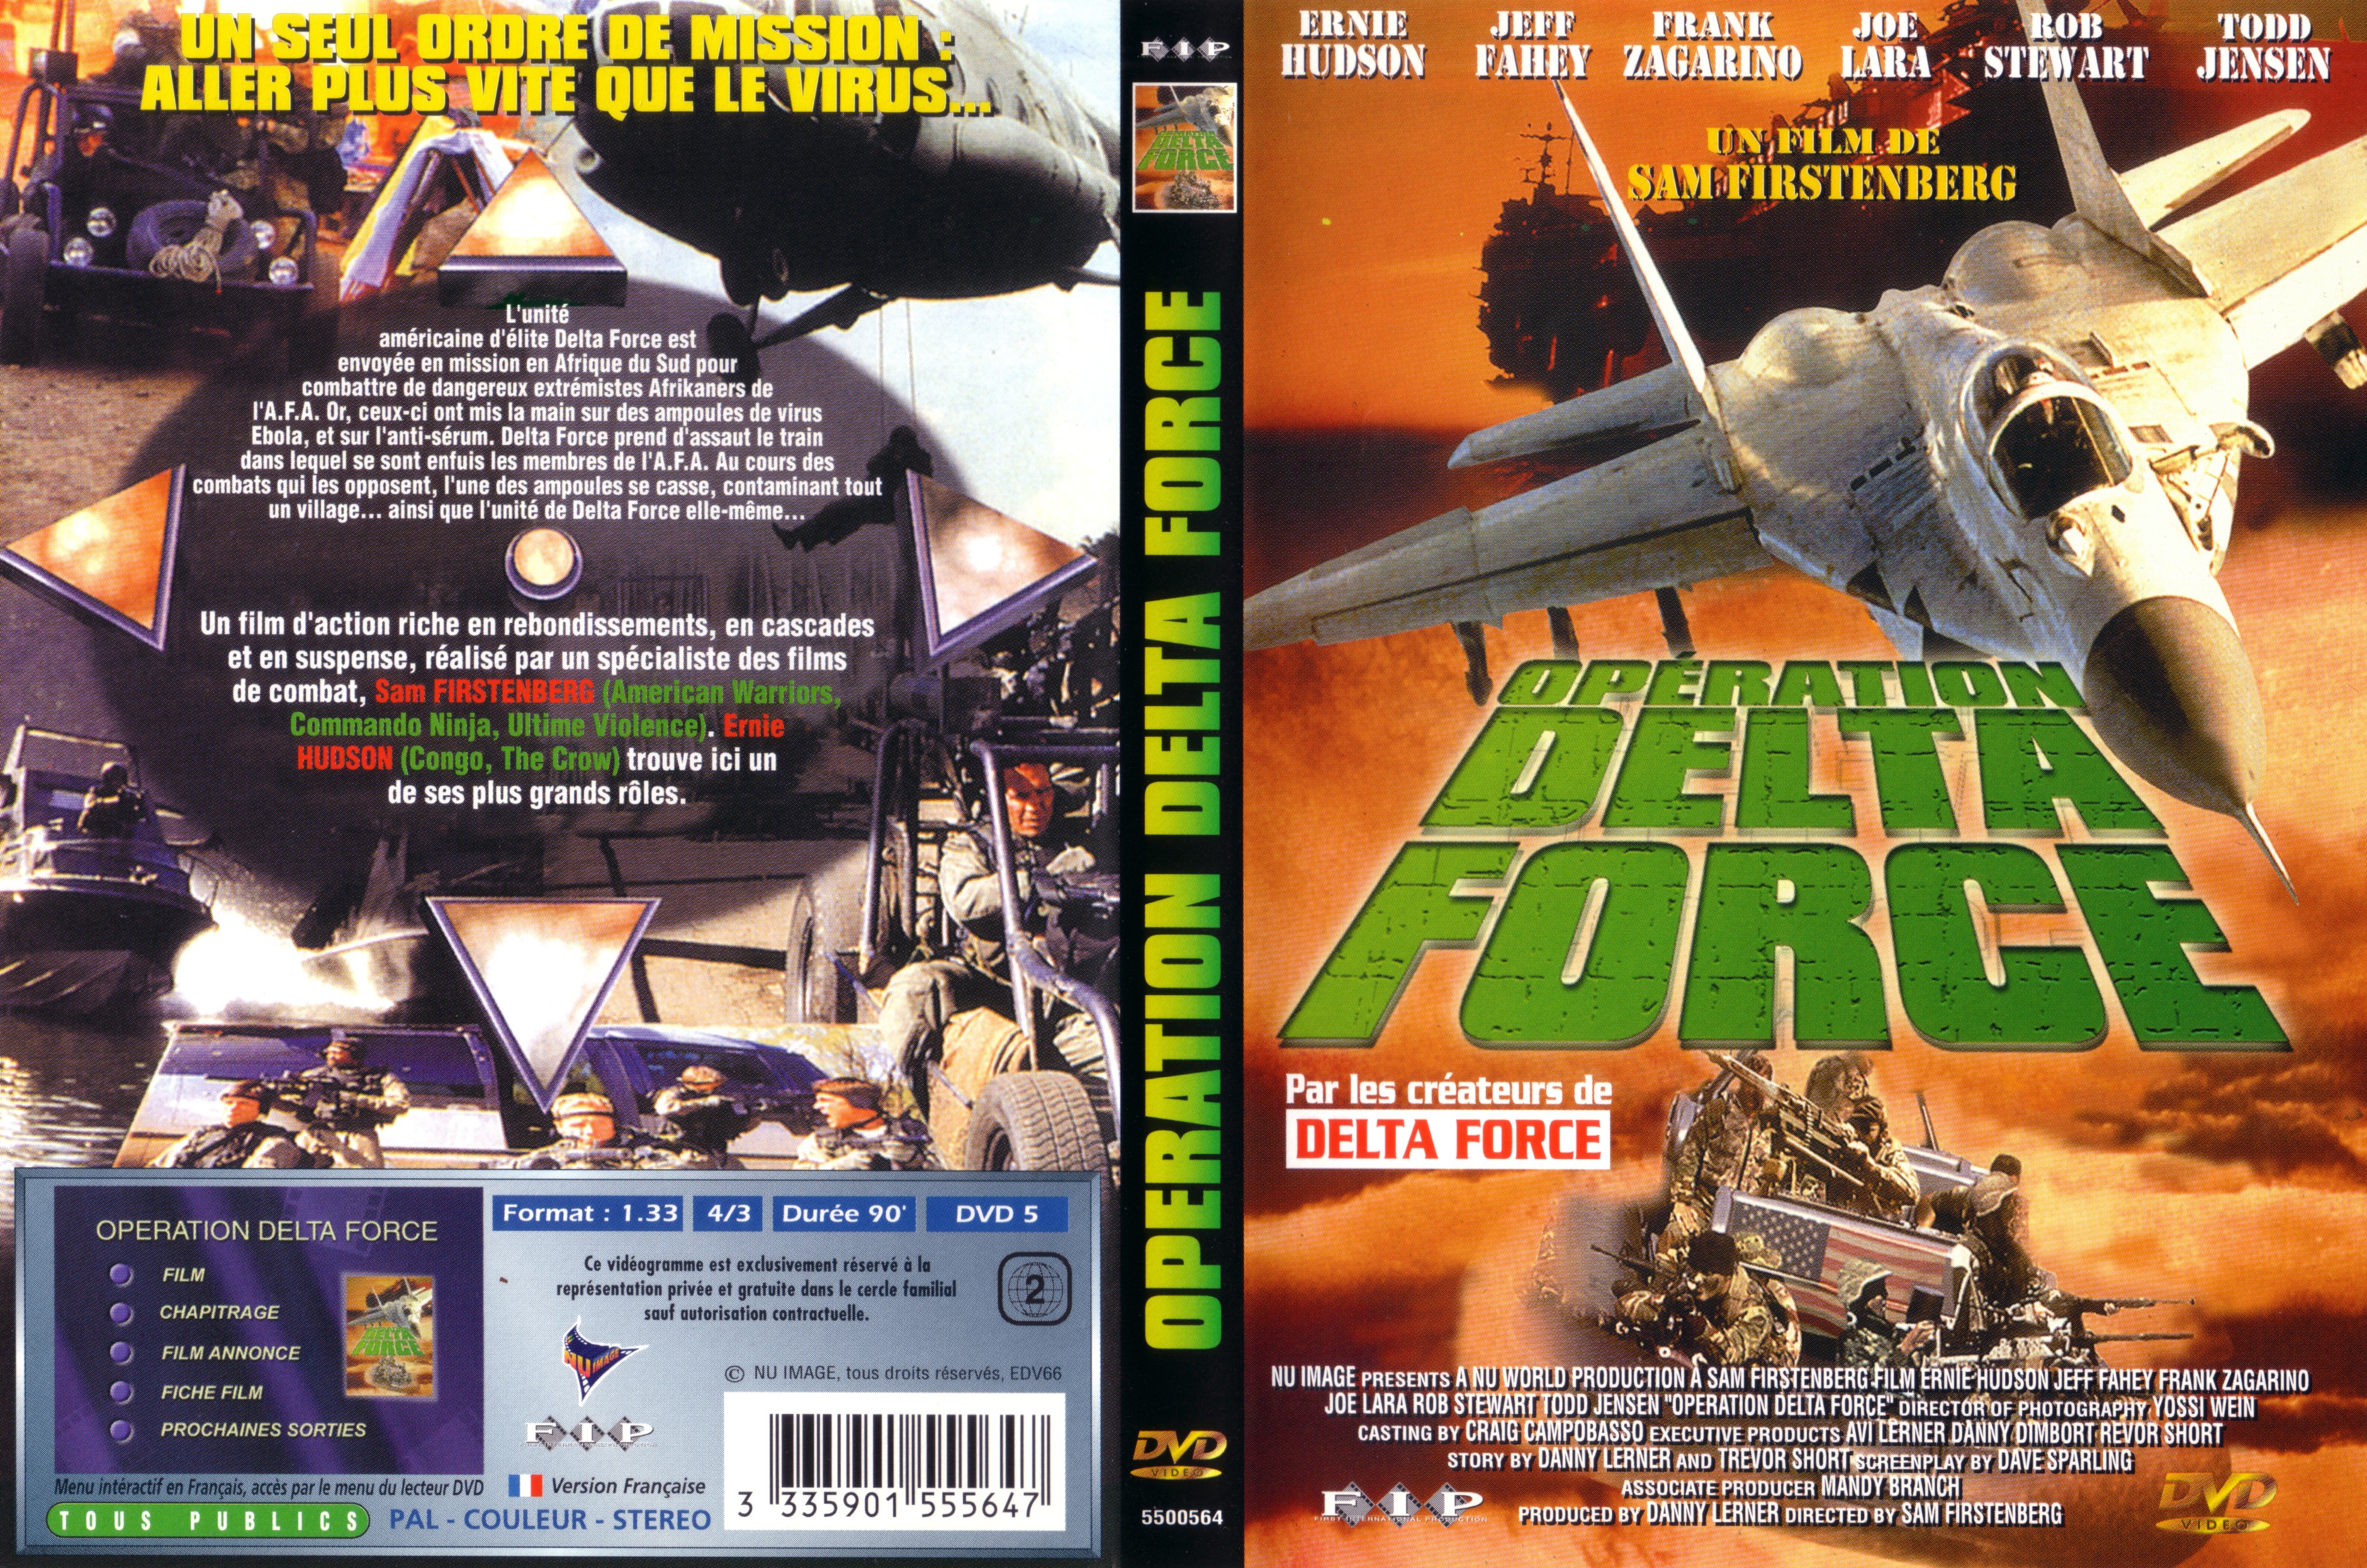 Jaquette DVD Opration delta force